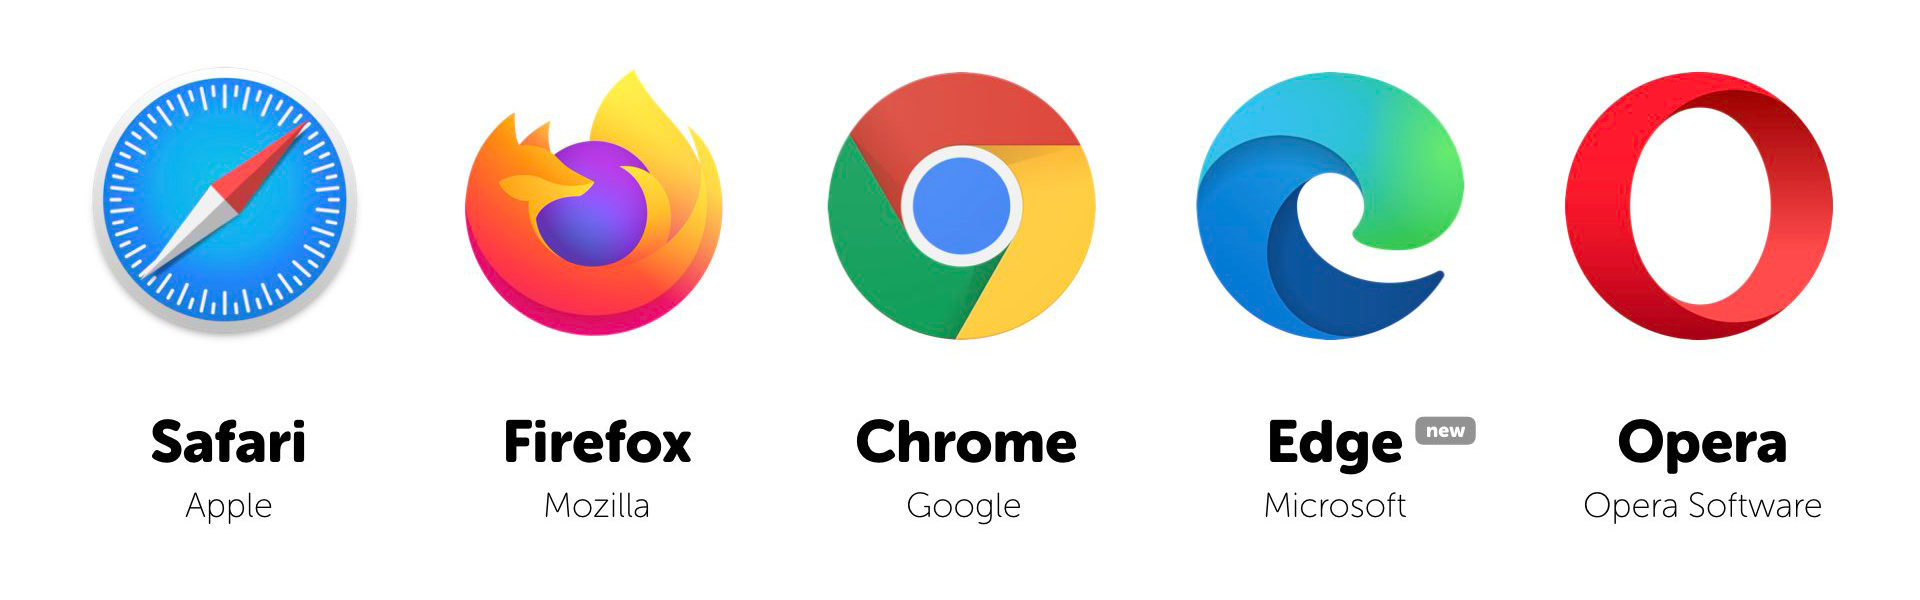 Browser logos for Safari, Firefox, Chrome, Edge and Opera